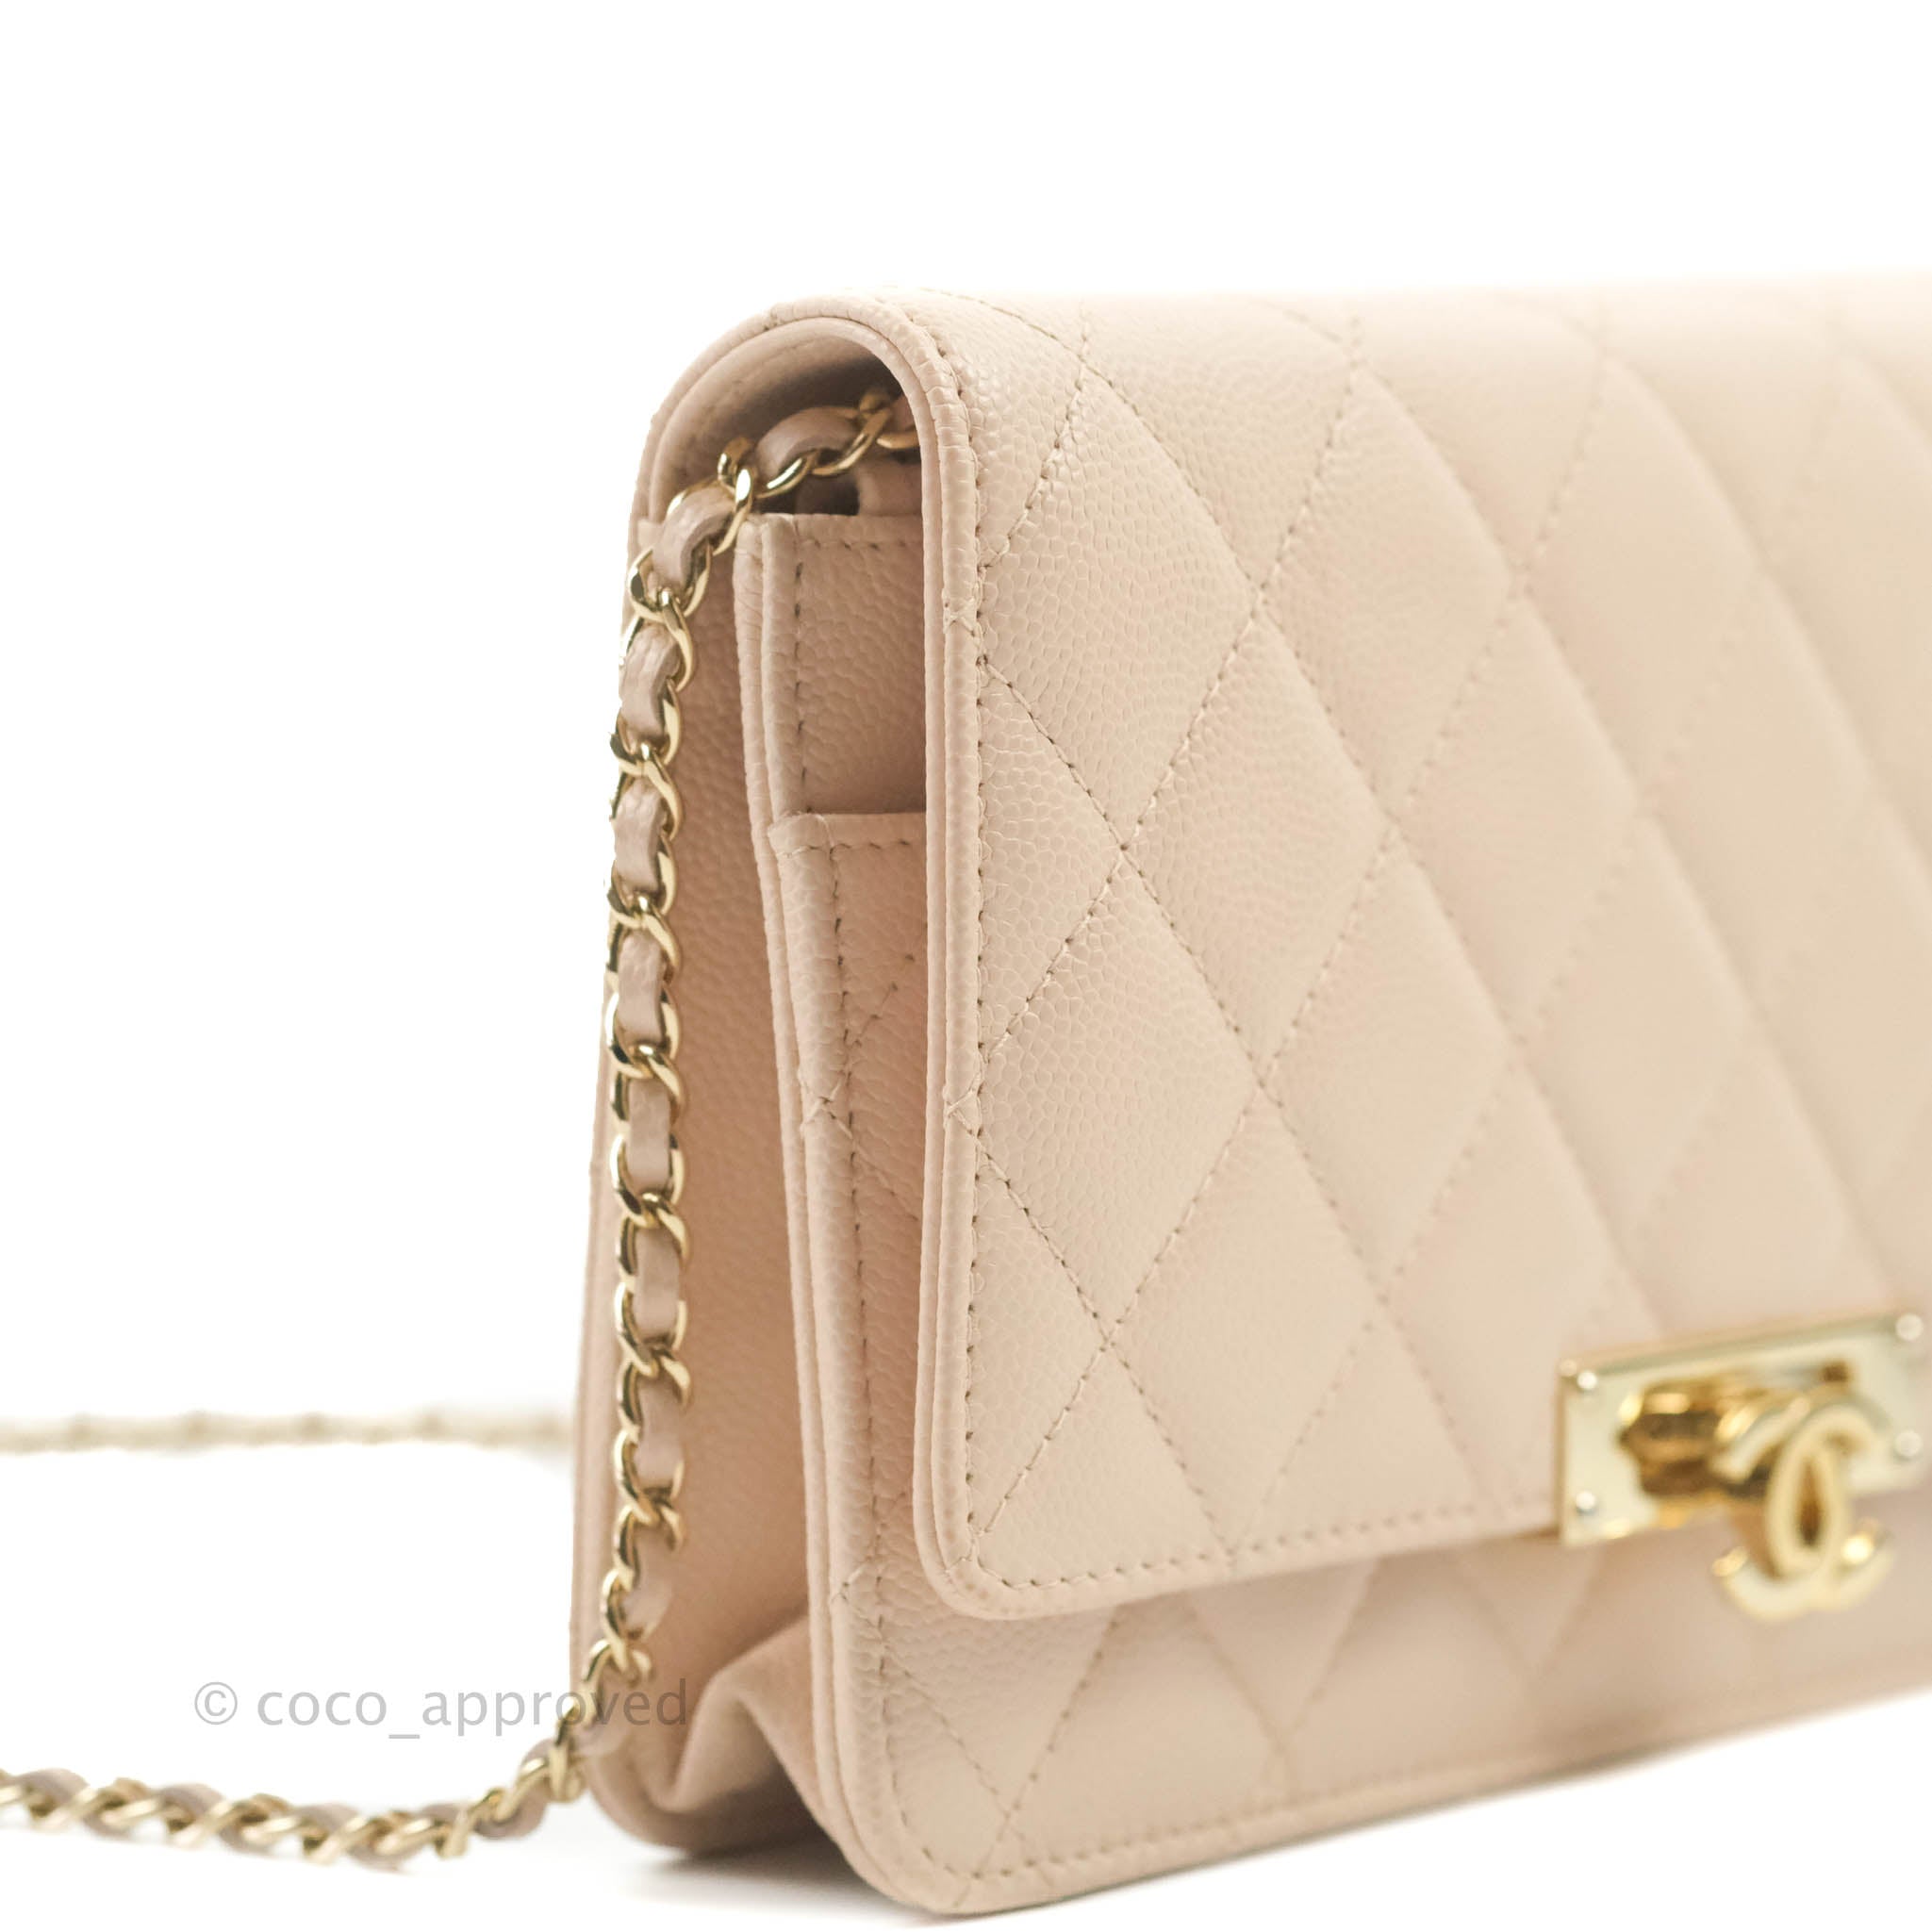 ✨ Chanel WOC Wallet on Chain - iridescent beige - LGHW Gold in